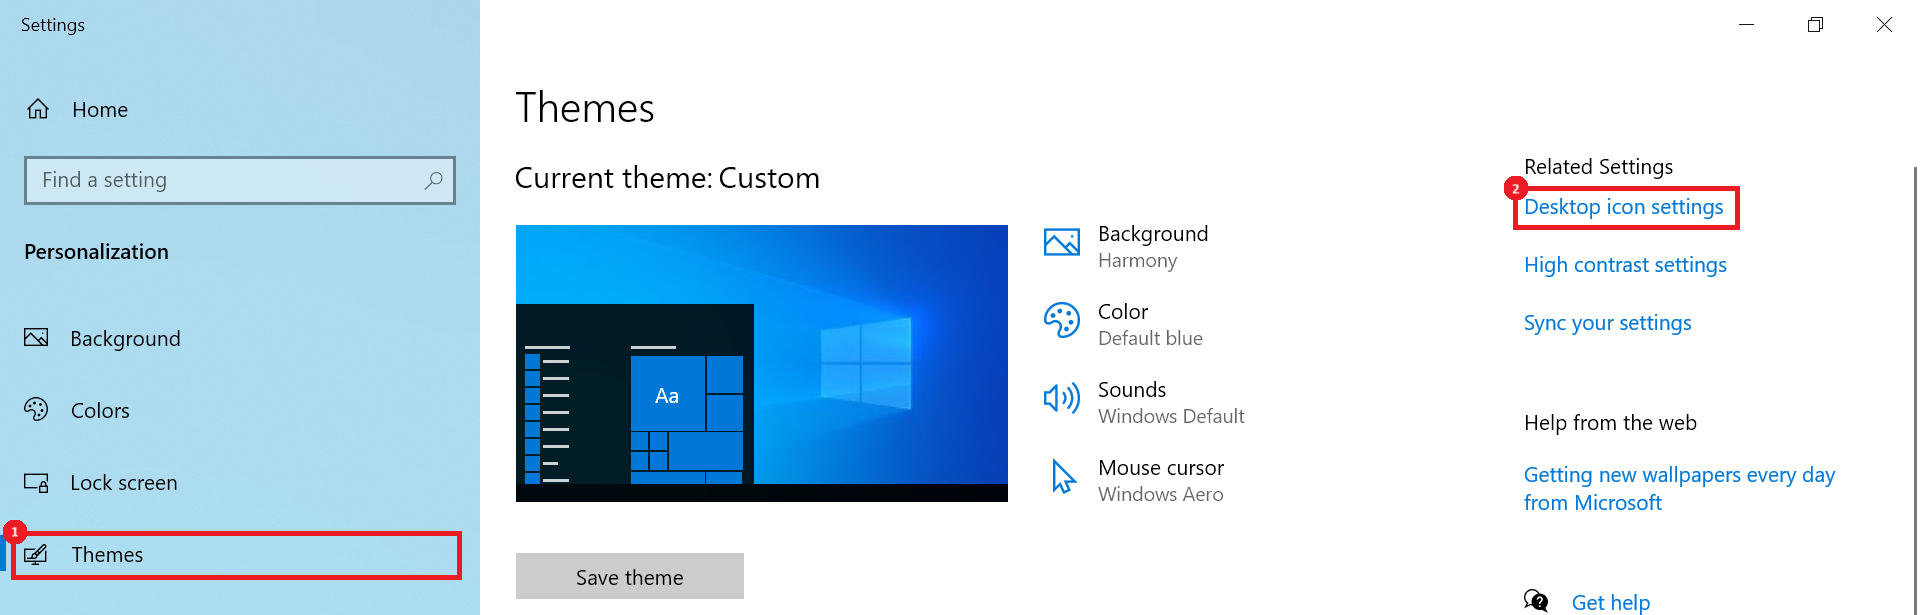 "Themes" in Windows 10 settings.